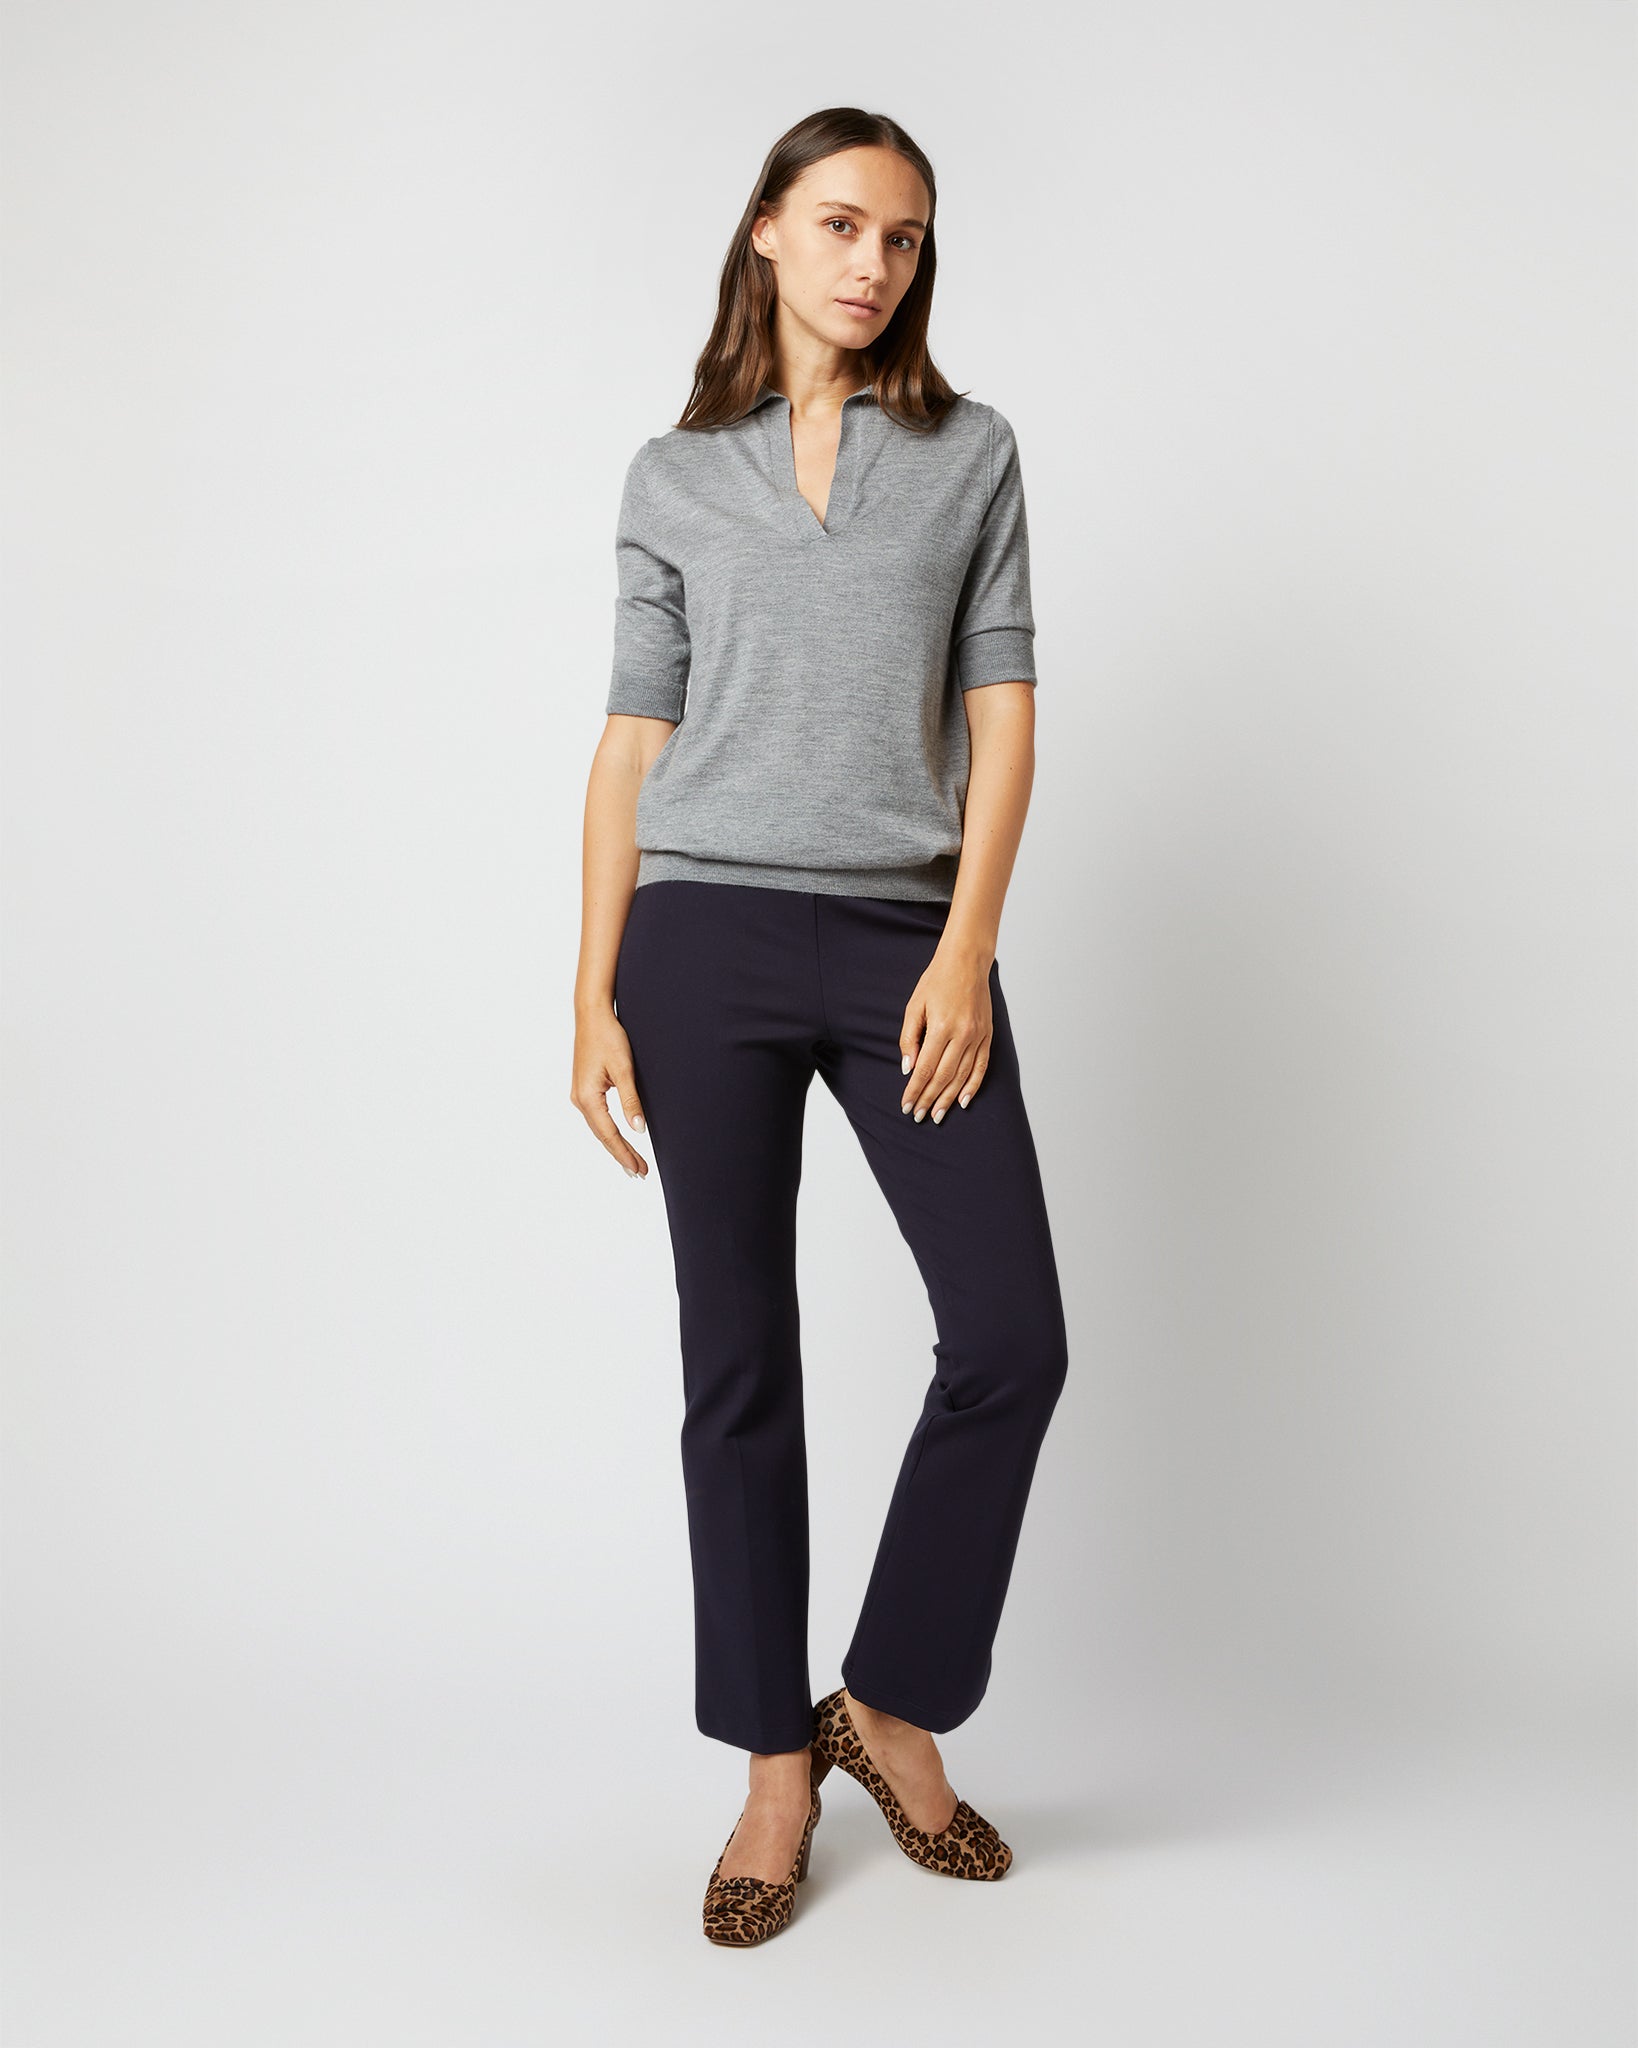 Half-Sleeved Georgina Sweater in Oxford Grey Cashmere